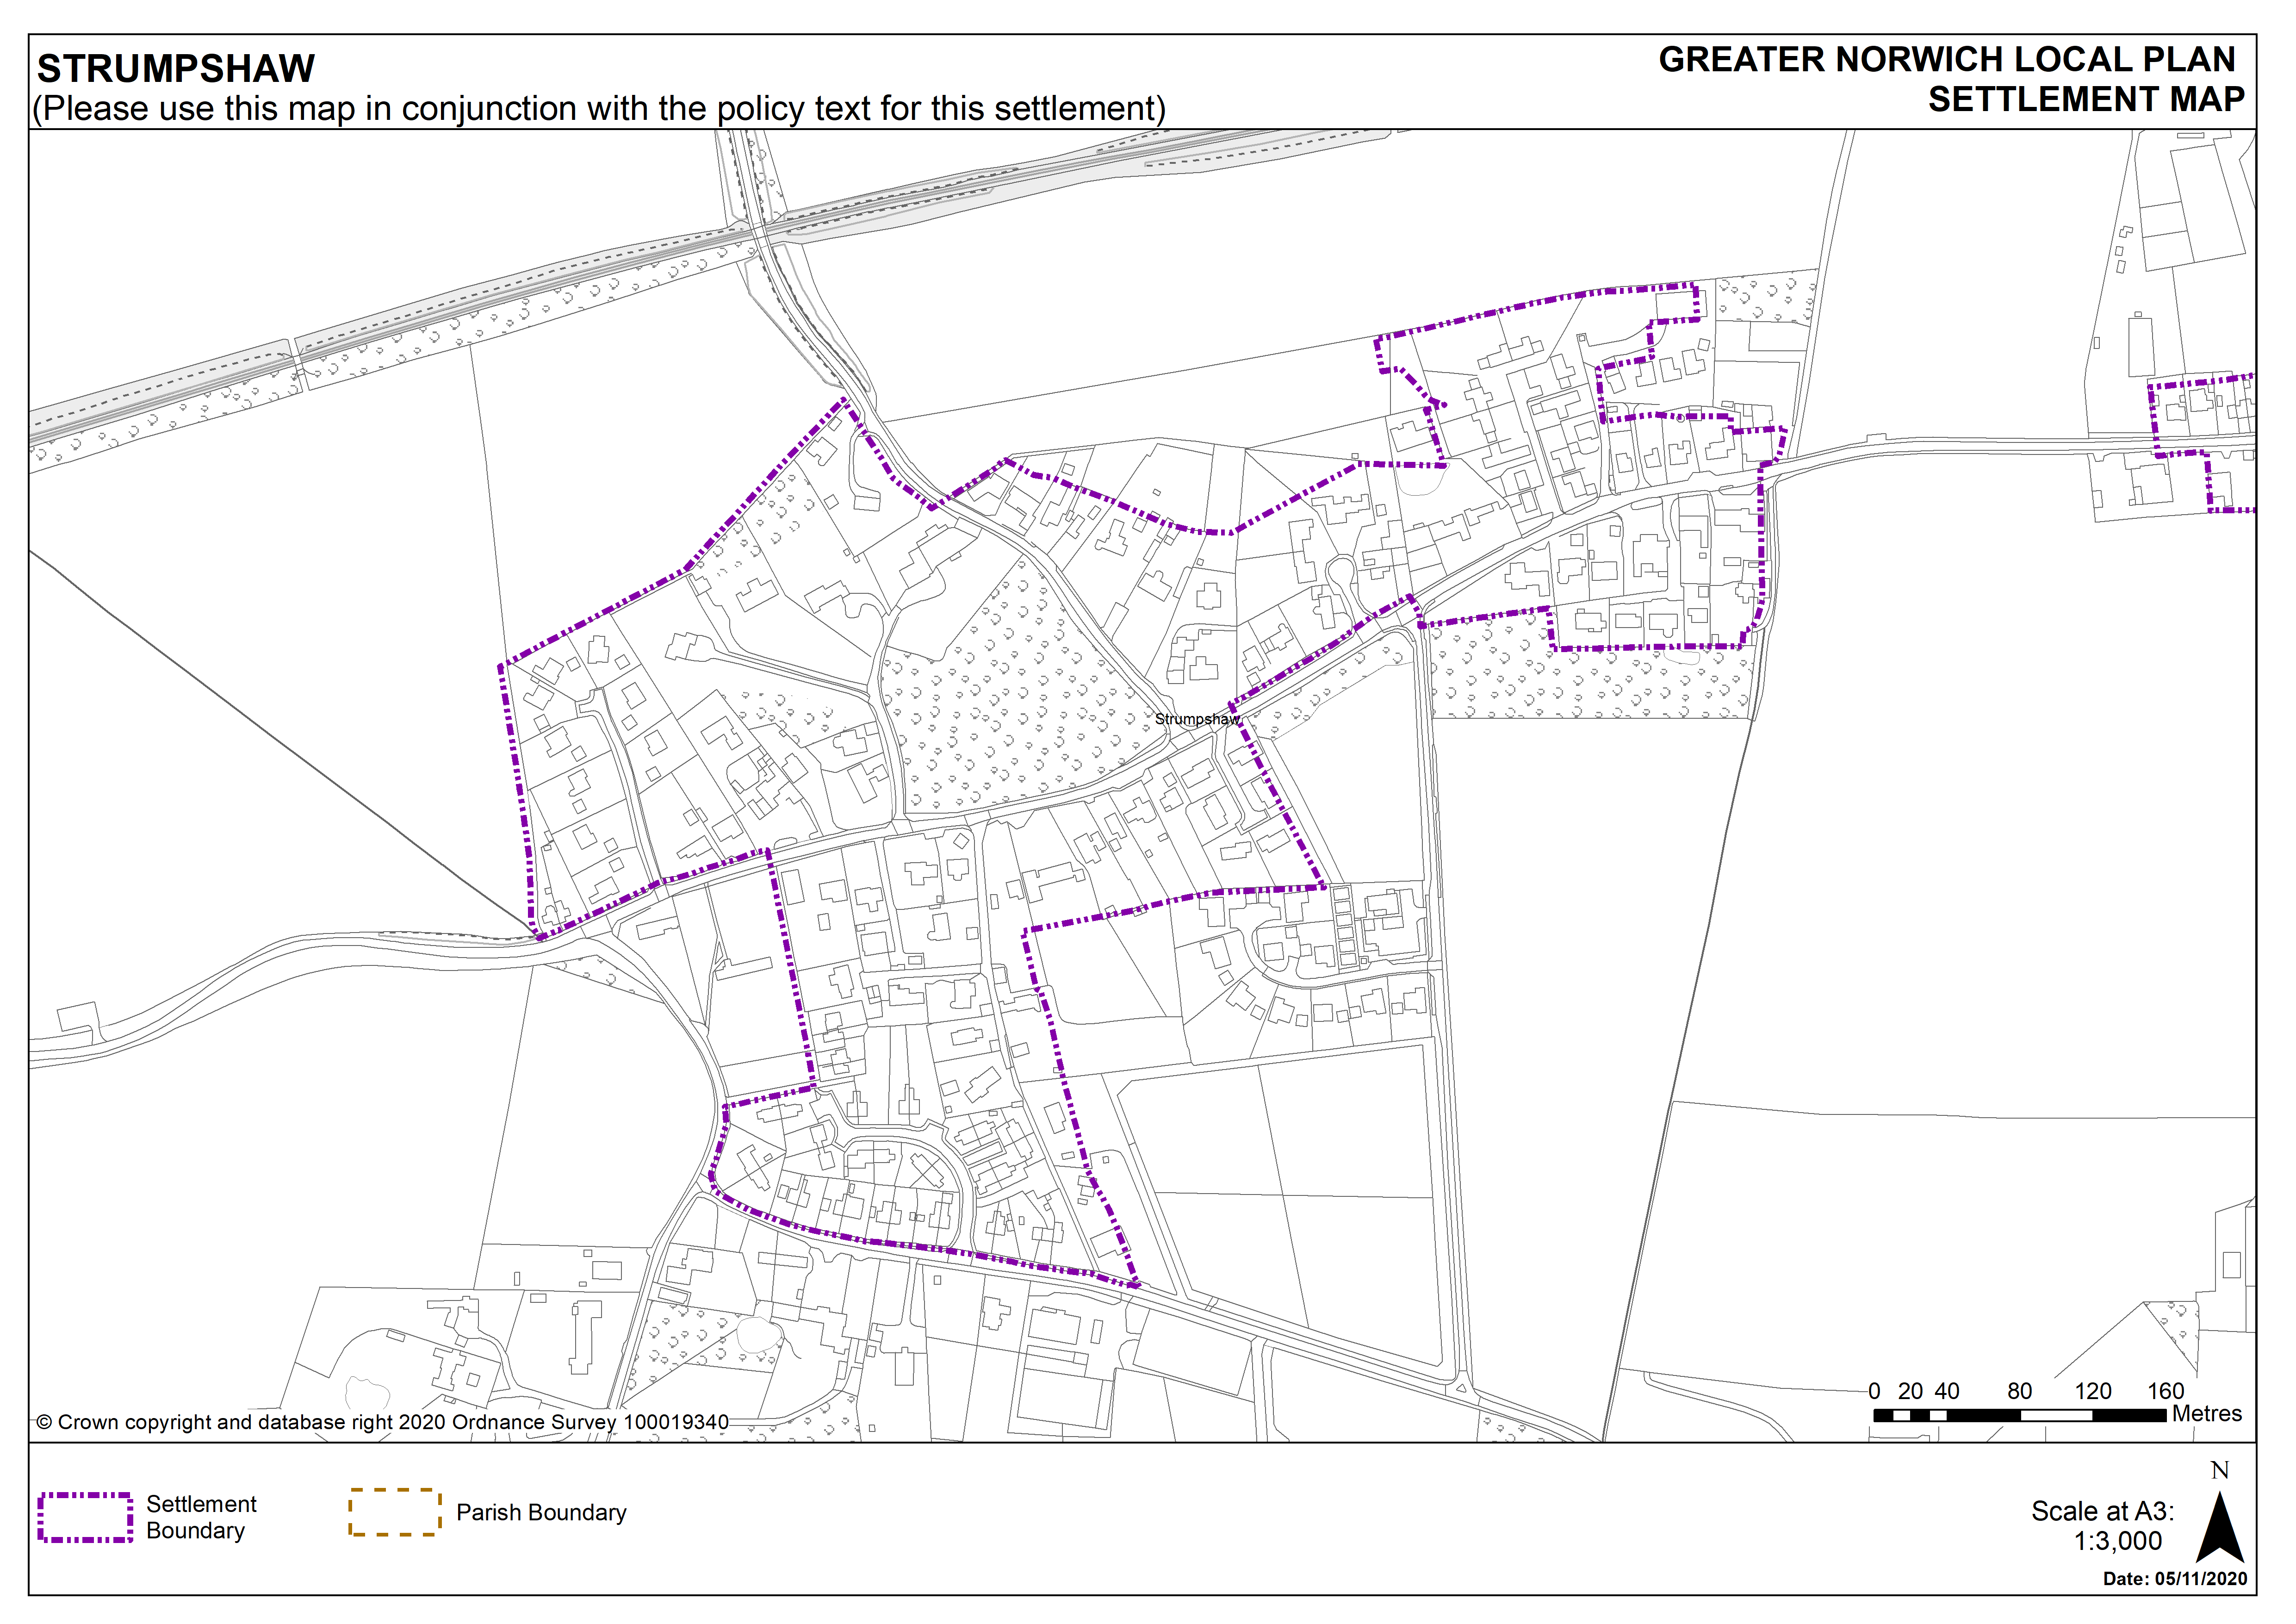 Strumpshaw Settlement Map